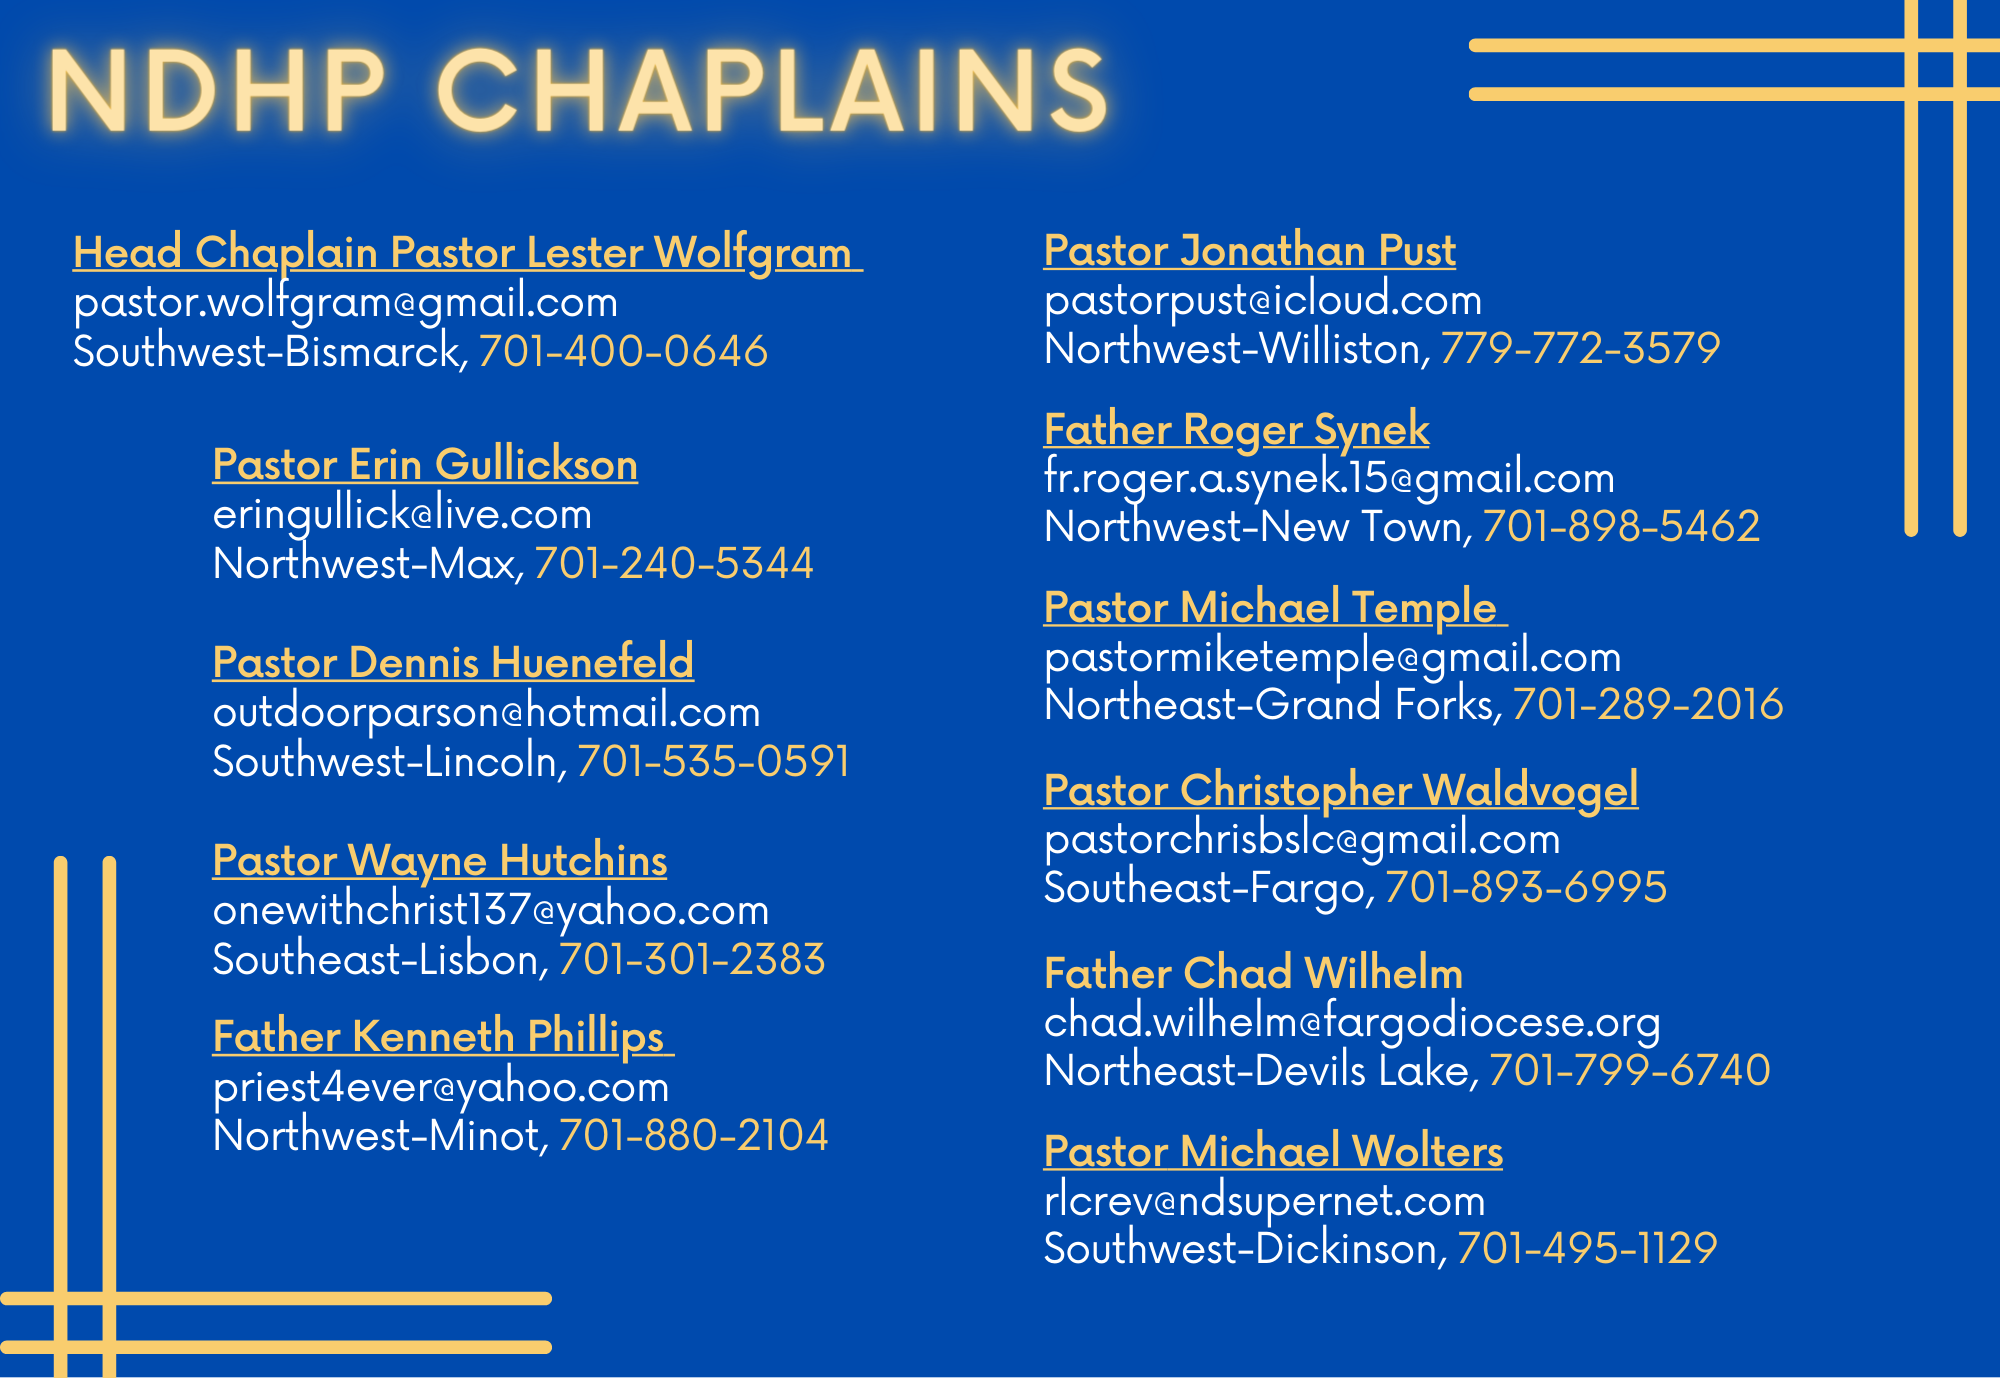 List of NDHP Chaplains